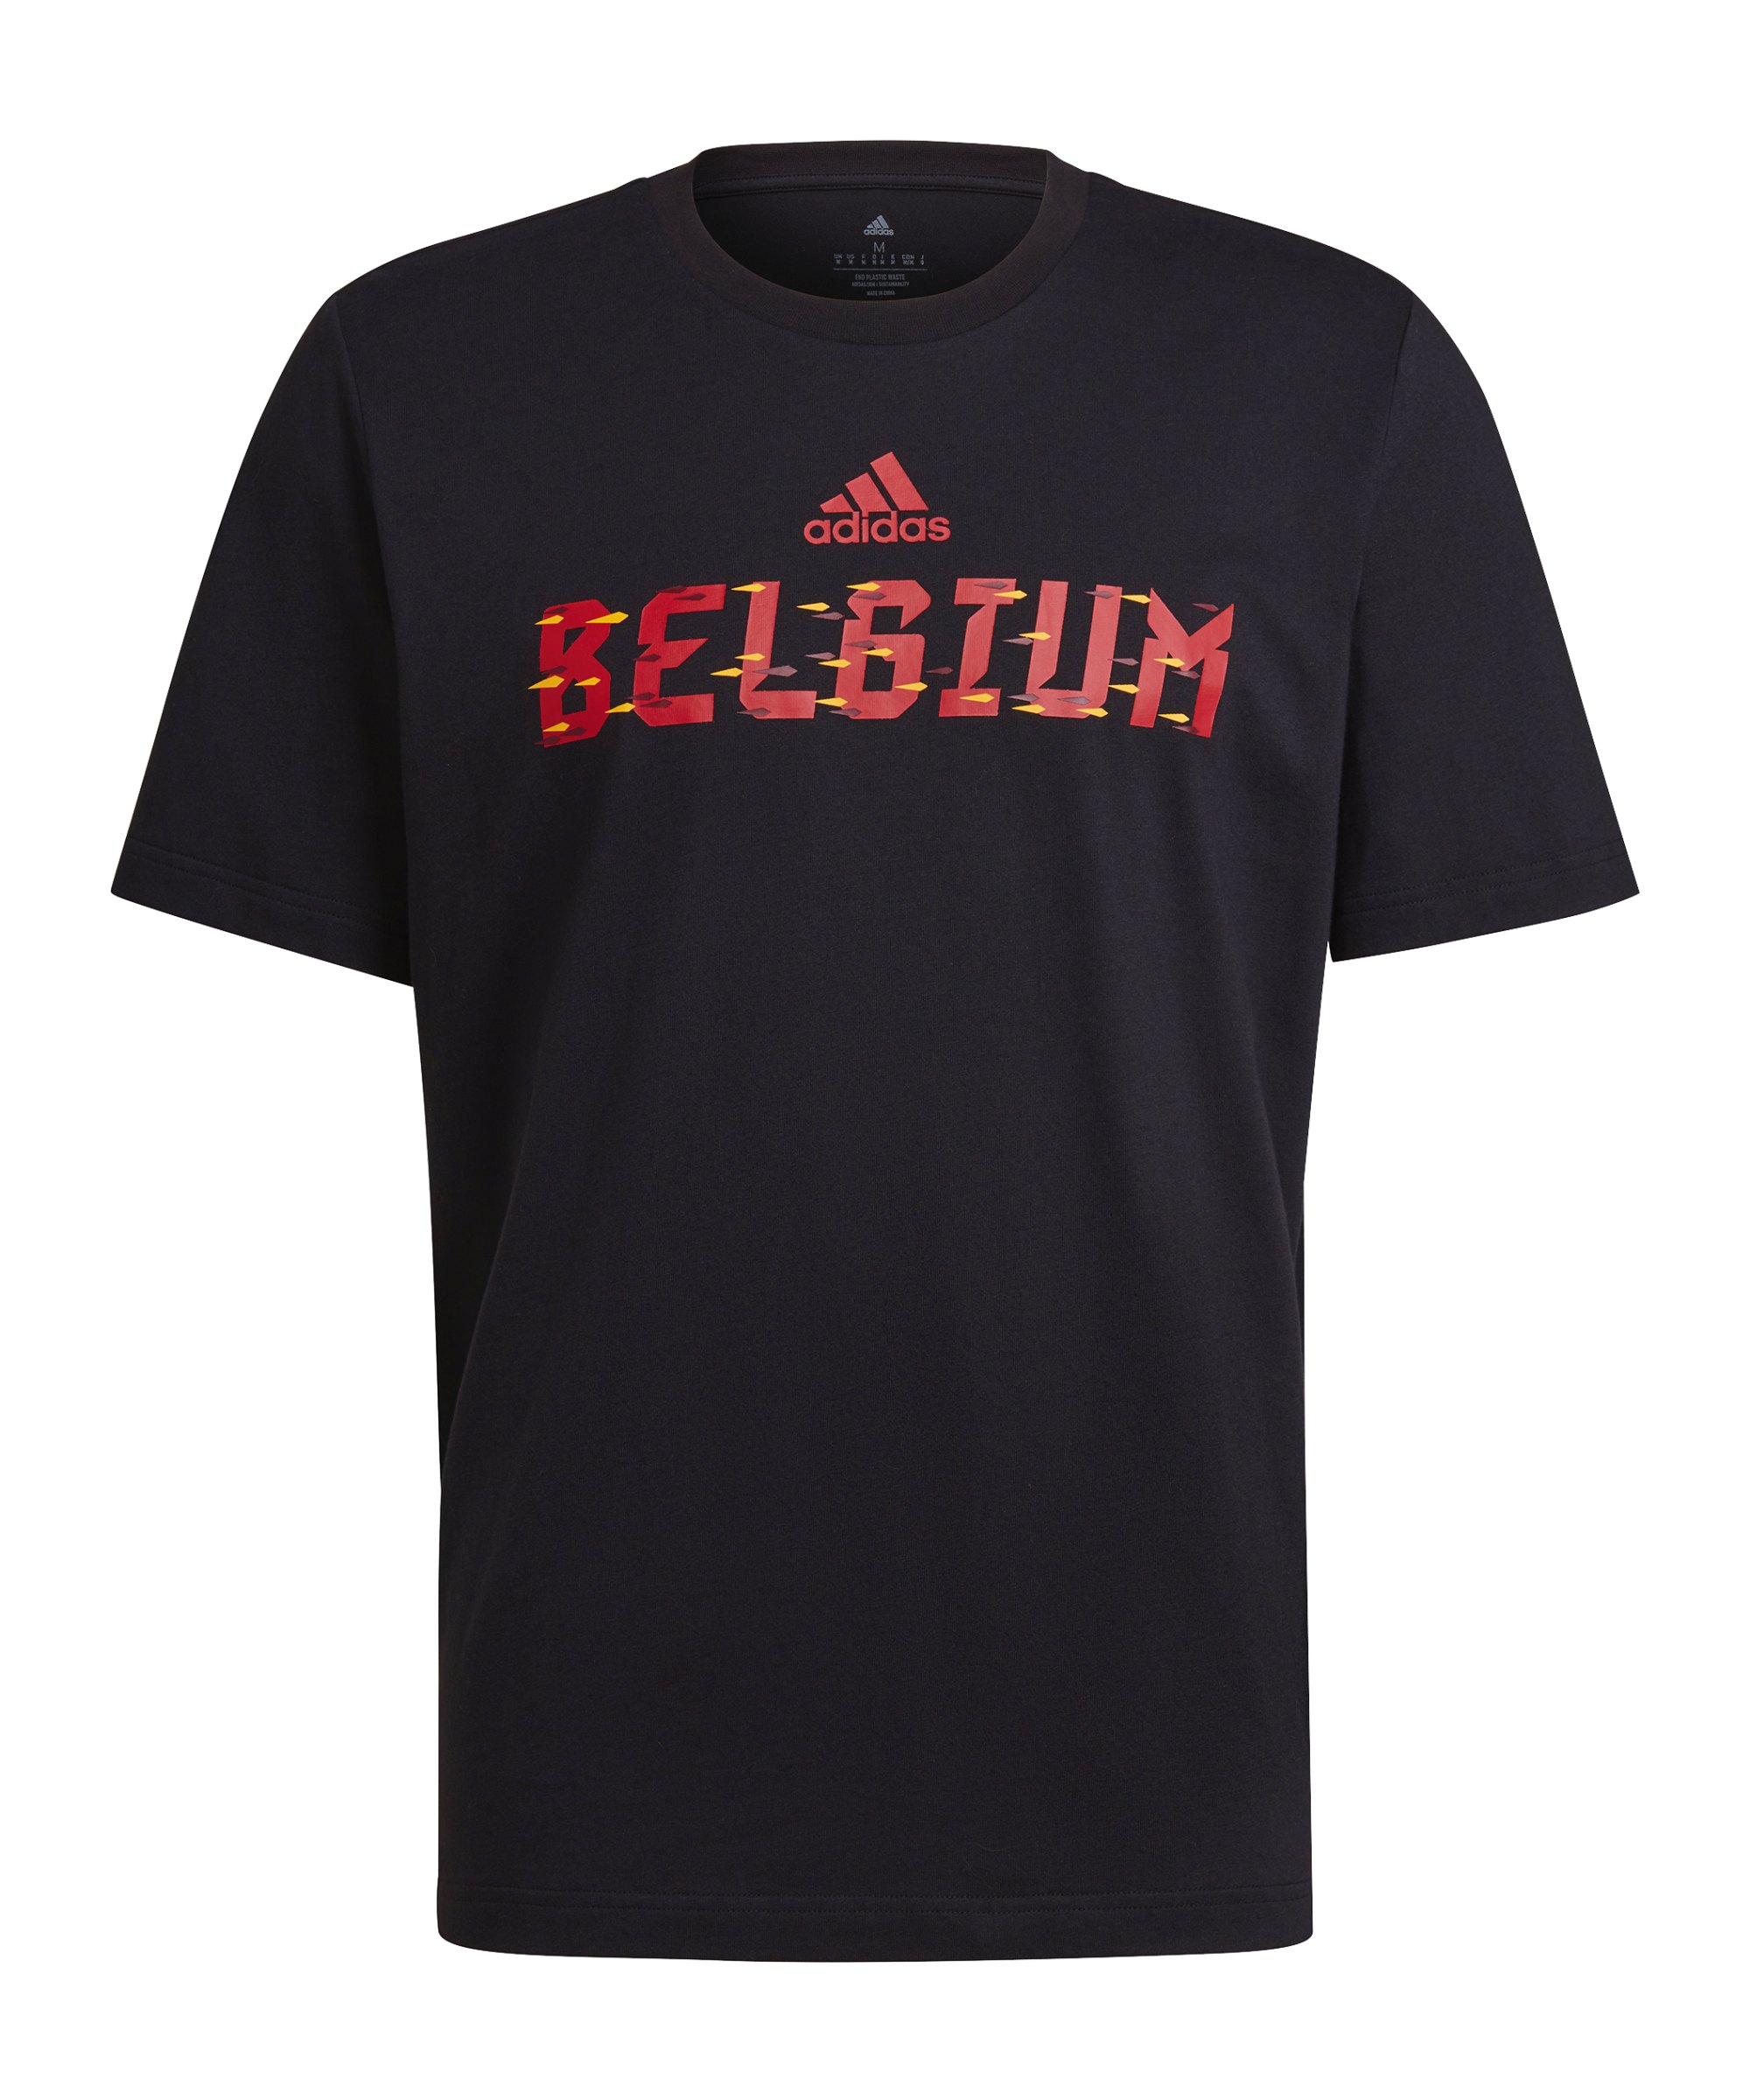 adidas Belgien T-Shirt Schwarz - schwarz